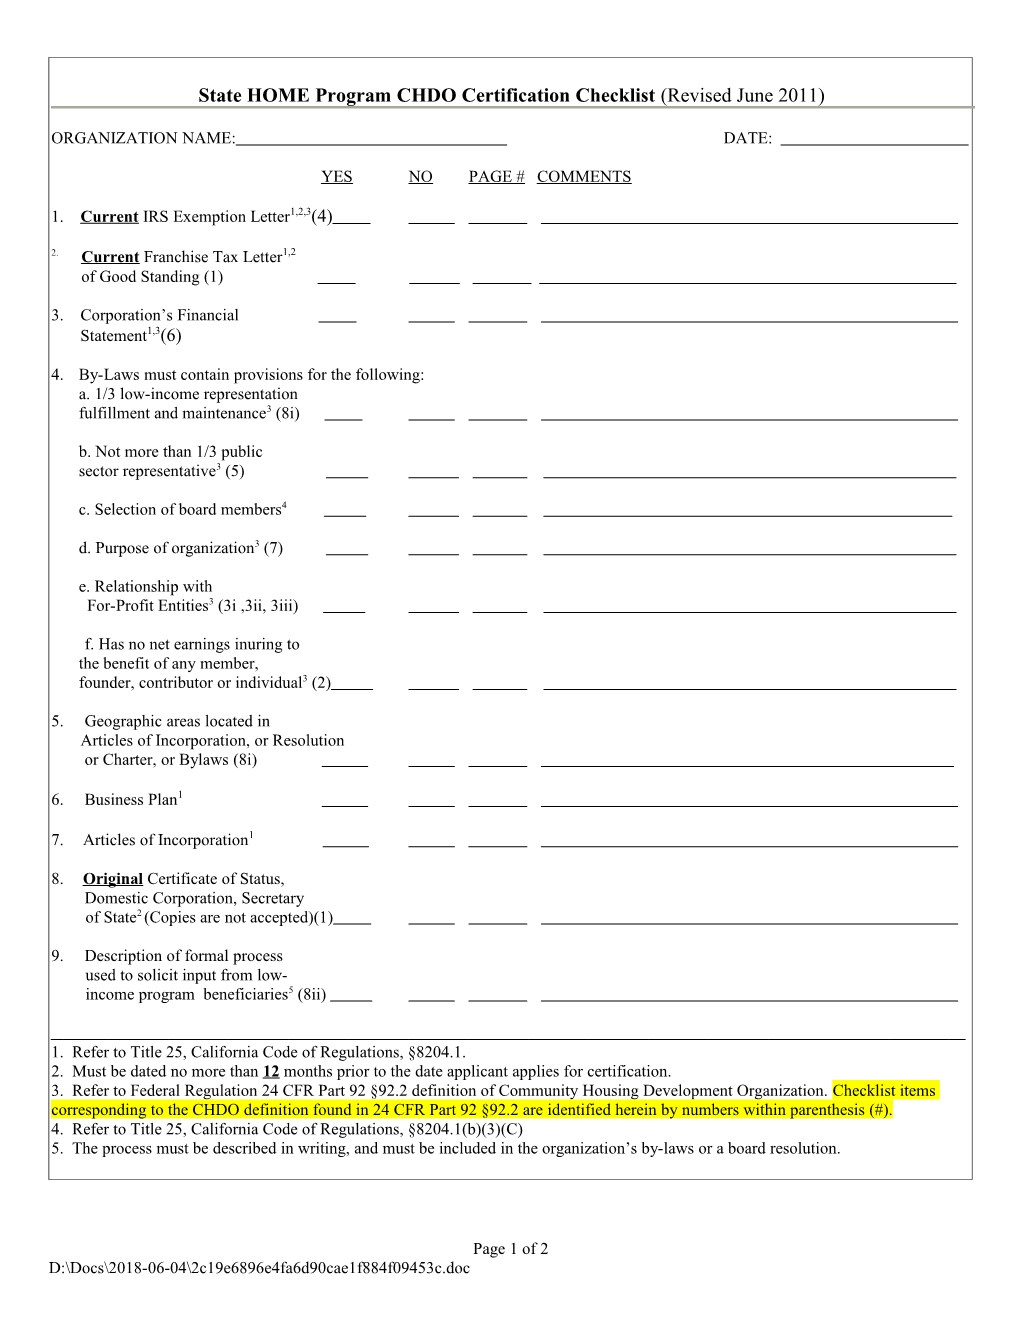 State HOME Program CHDO Certification Checklist (Revised June 2011)